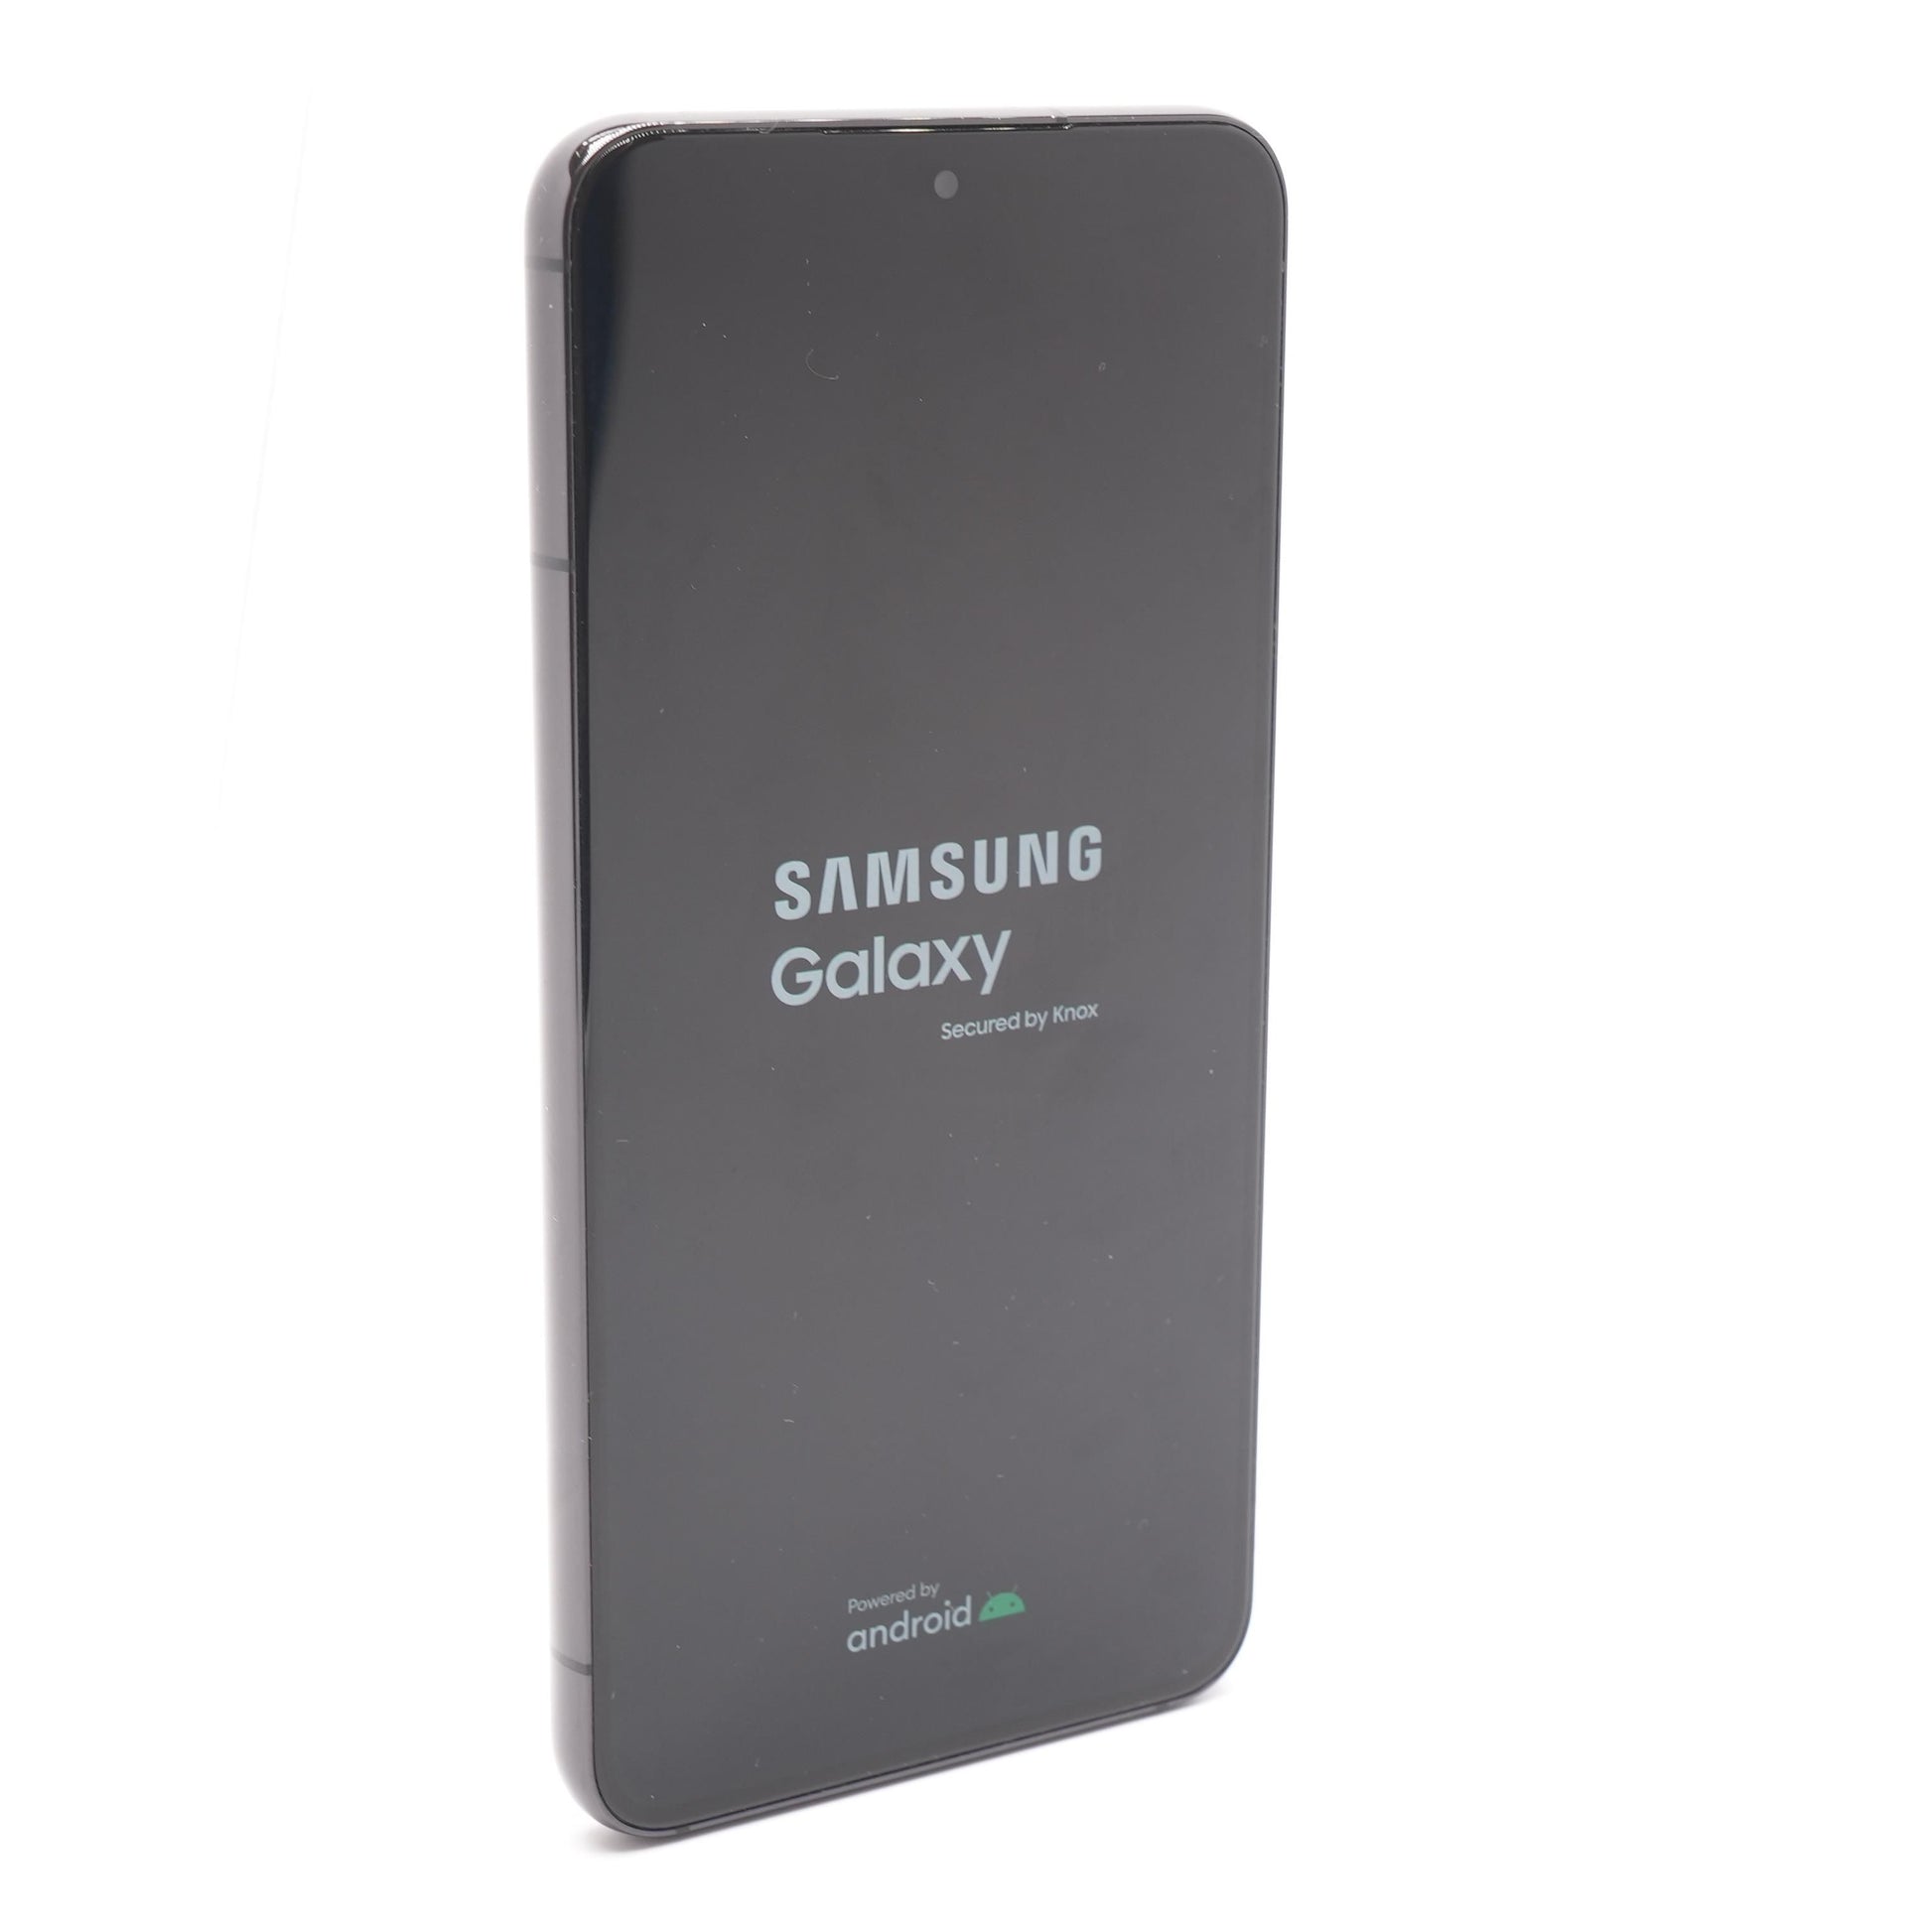 Buy Samsung Galaxy S22 5G in Phantom White color 128GB